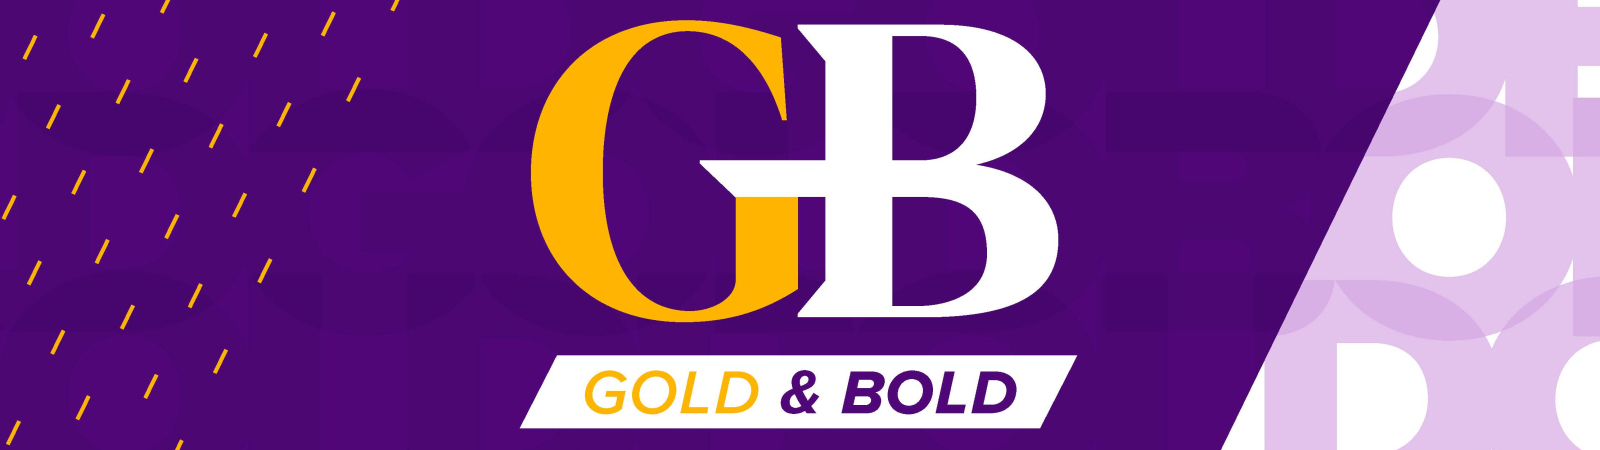 GB-GOLD & Bold-header